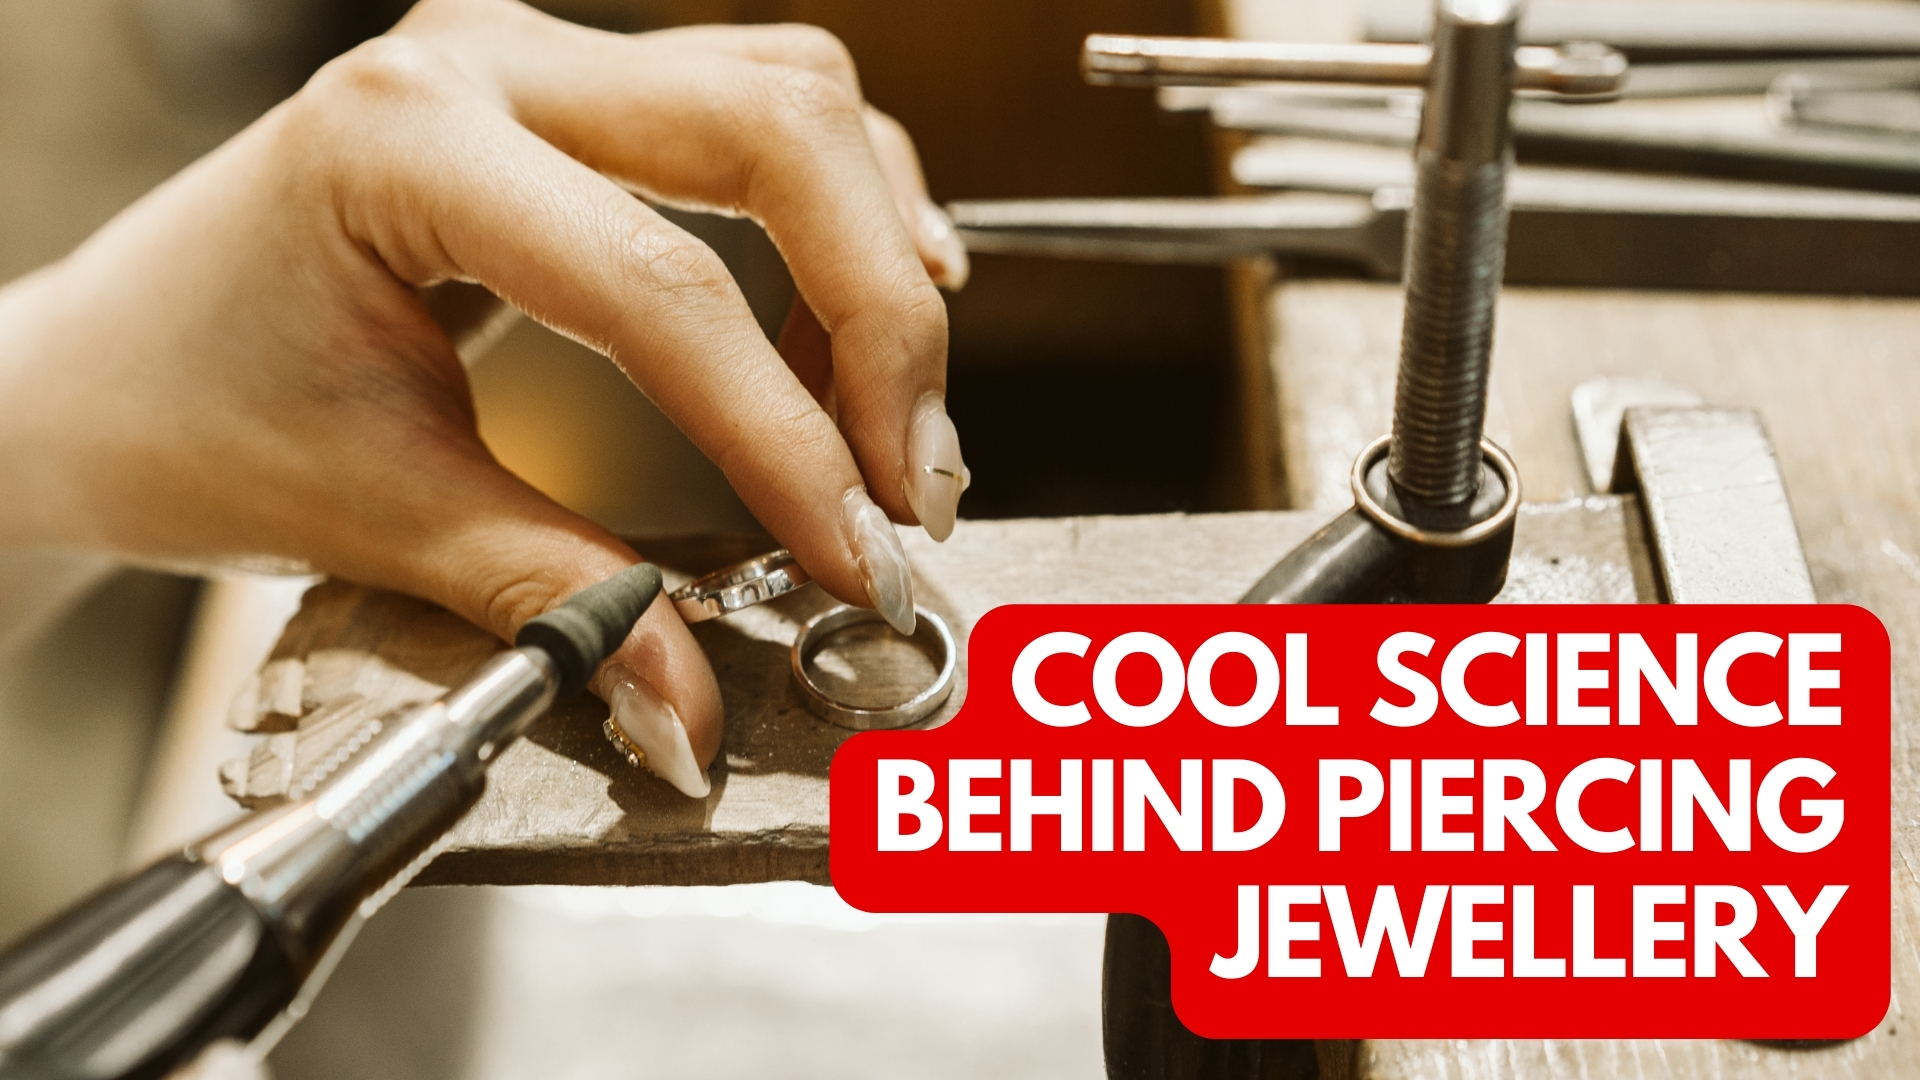 The Cool Science Behind Piercing Jewellery